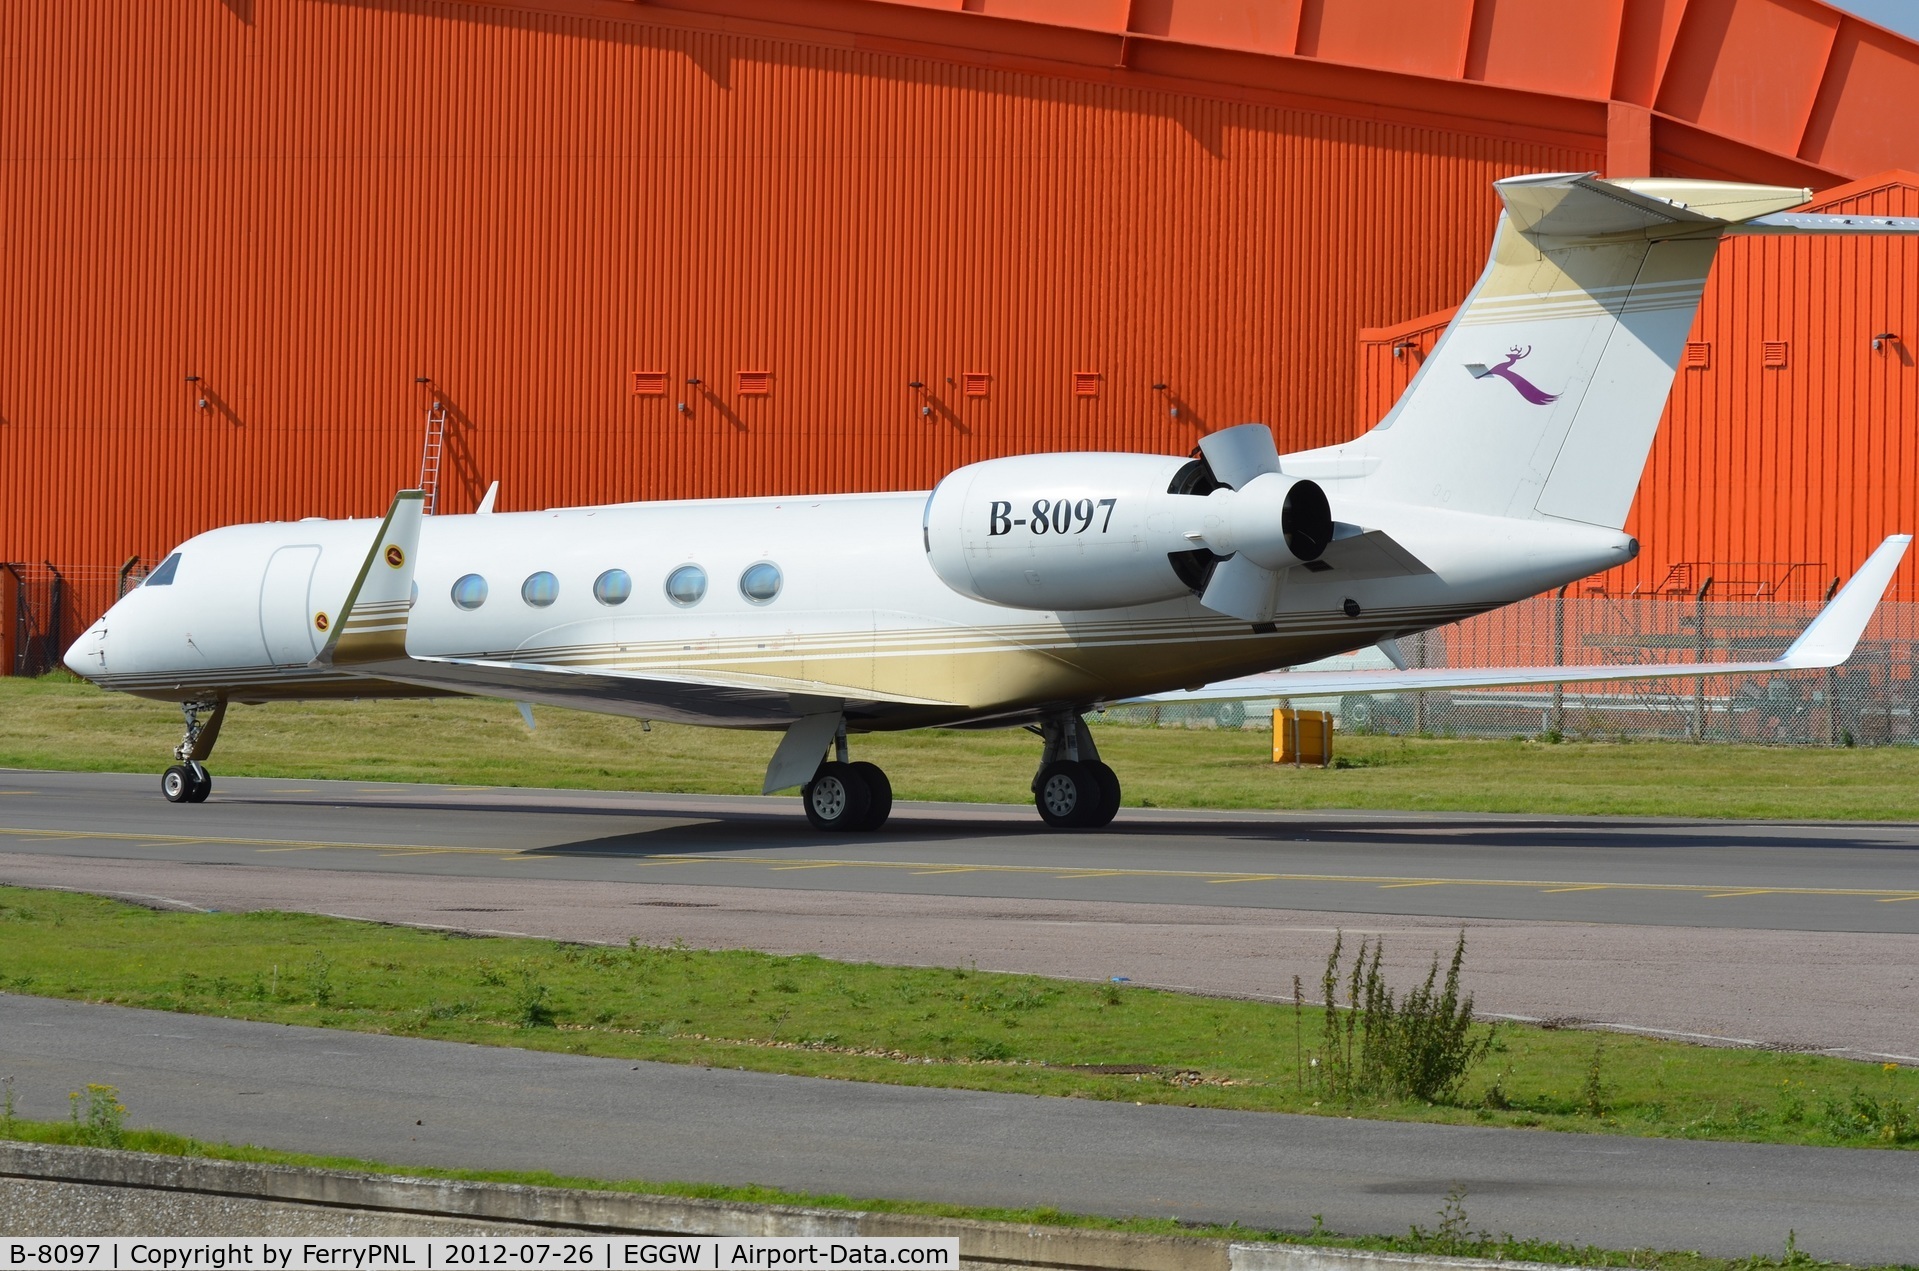 B-8097, 2000 Gulfstream Aerospace G-V C/N 613, Deer Jet G5 in Luton for the 2012 Olympics